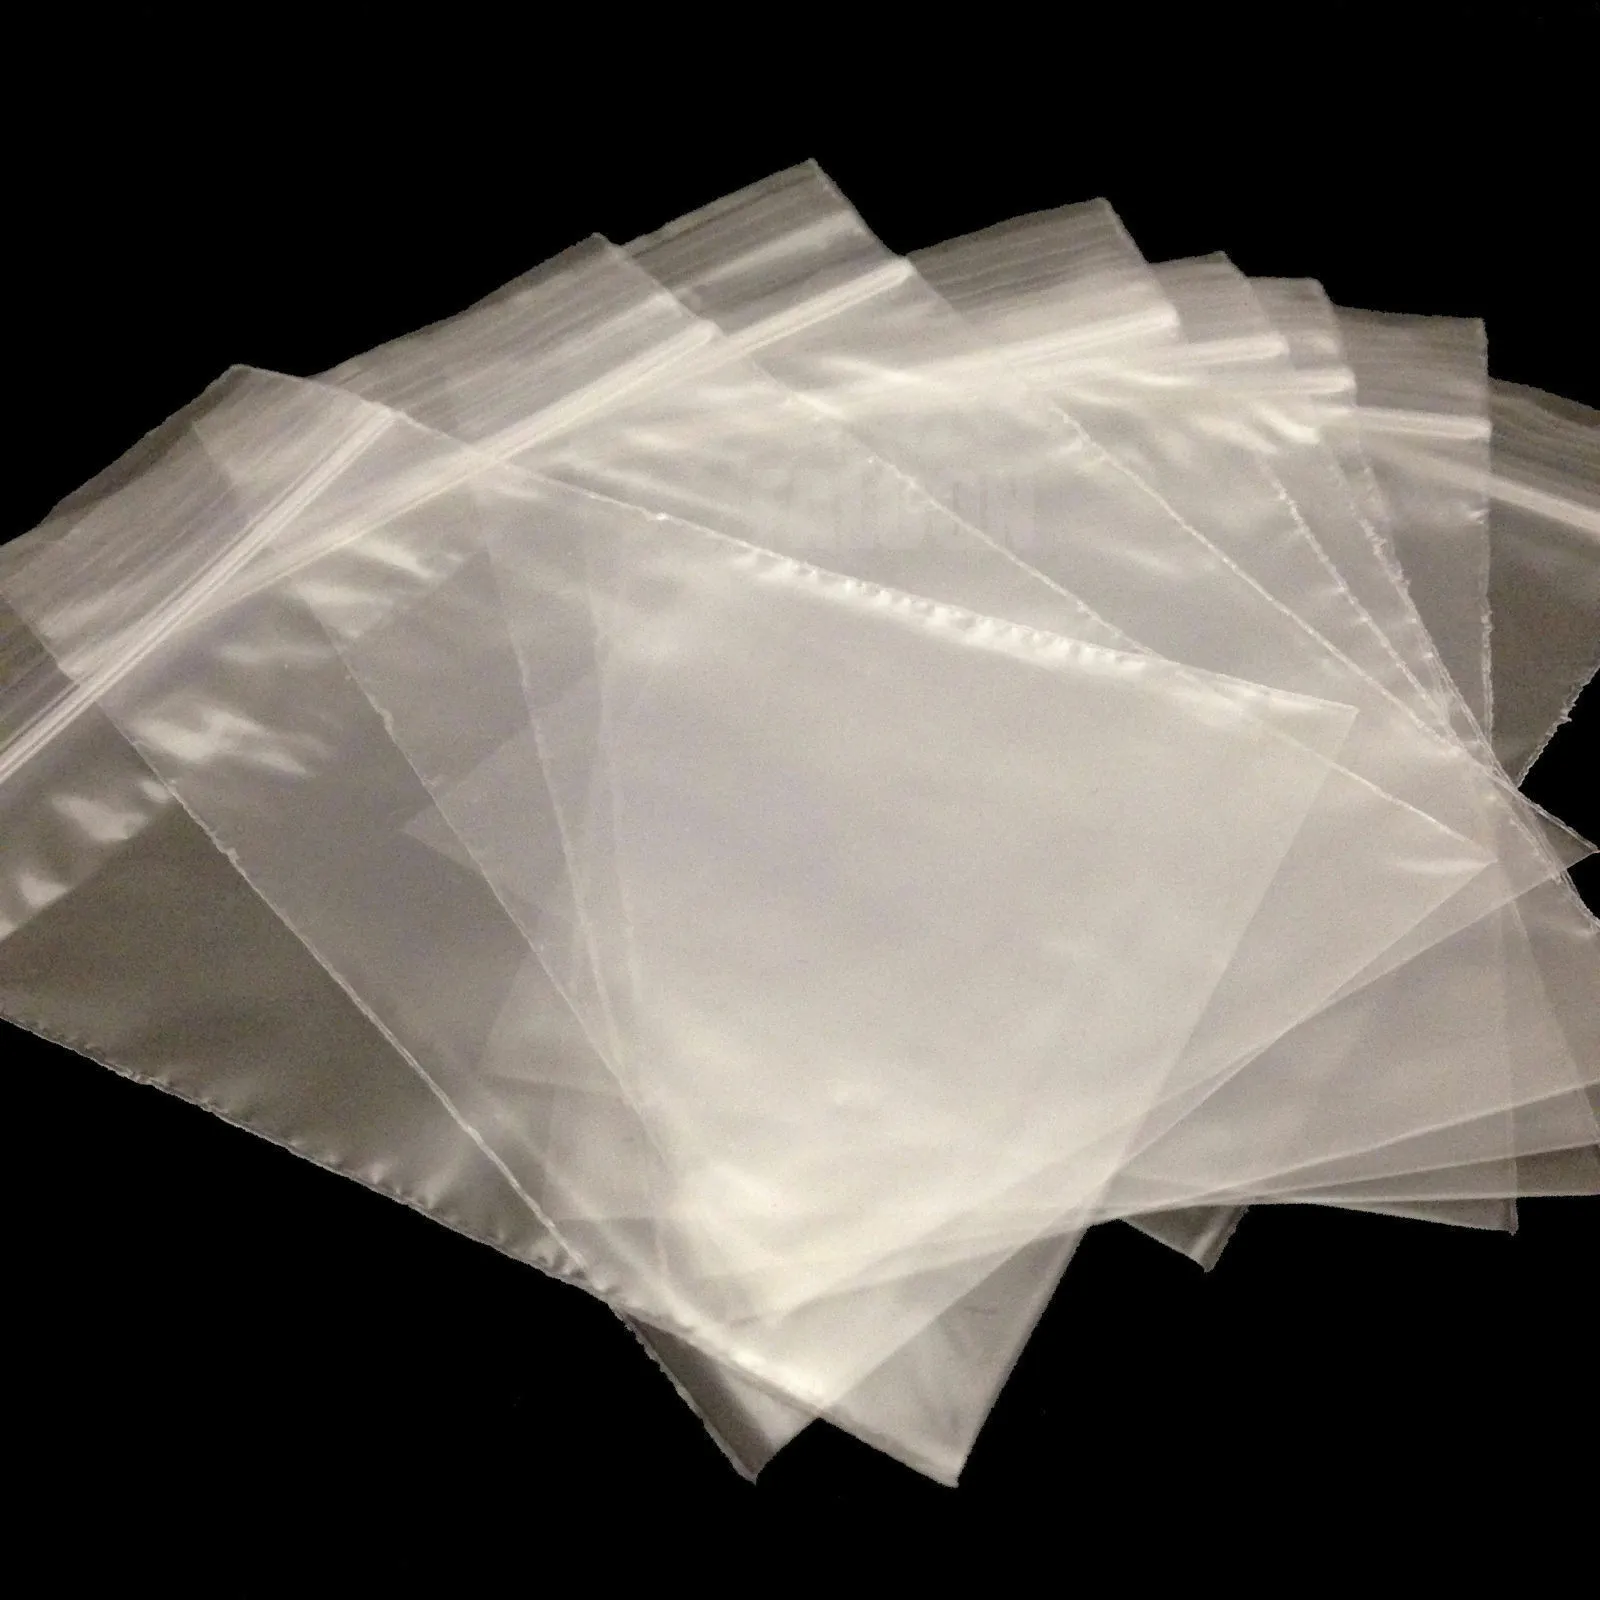 100 Small Clear Plastic Bags Baggy Grip Self Seal Resealable Zip Shns roMTI 